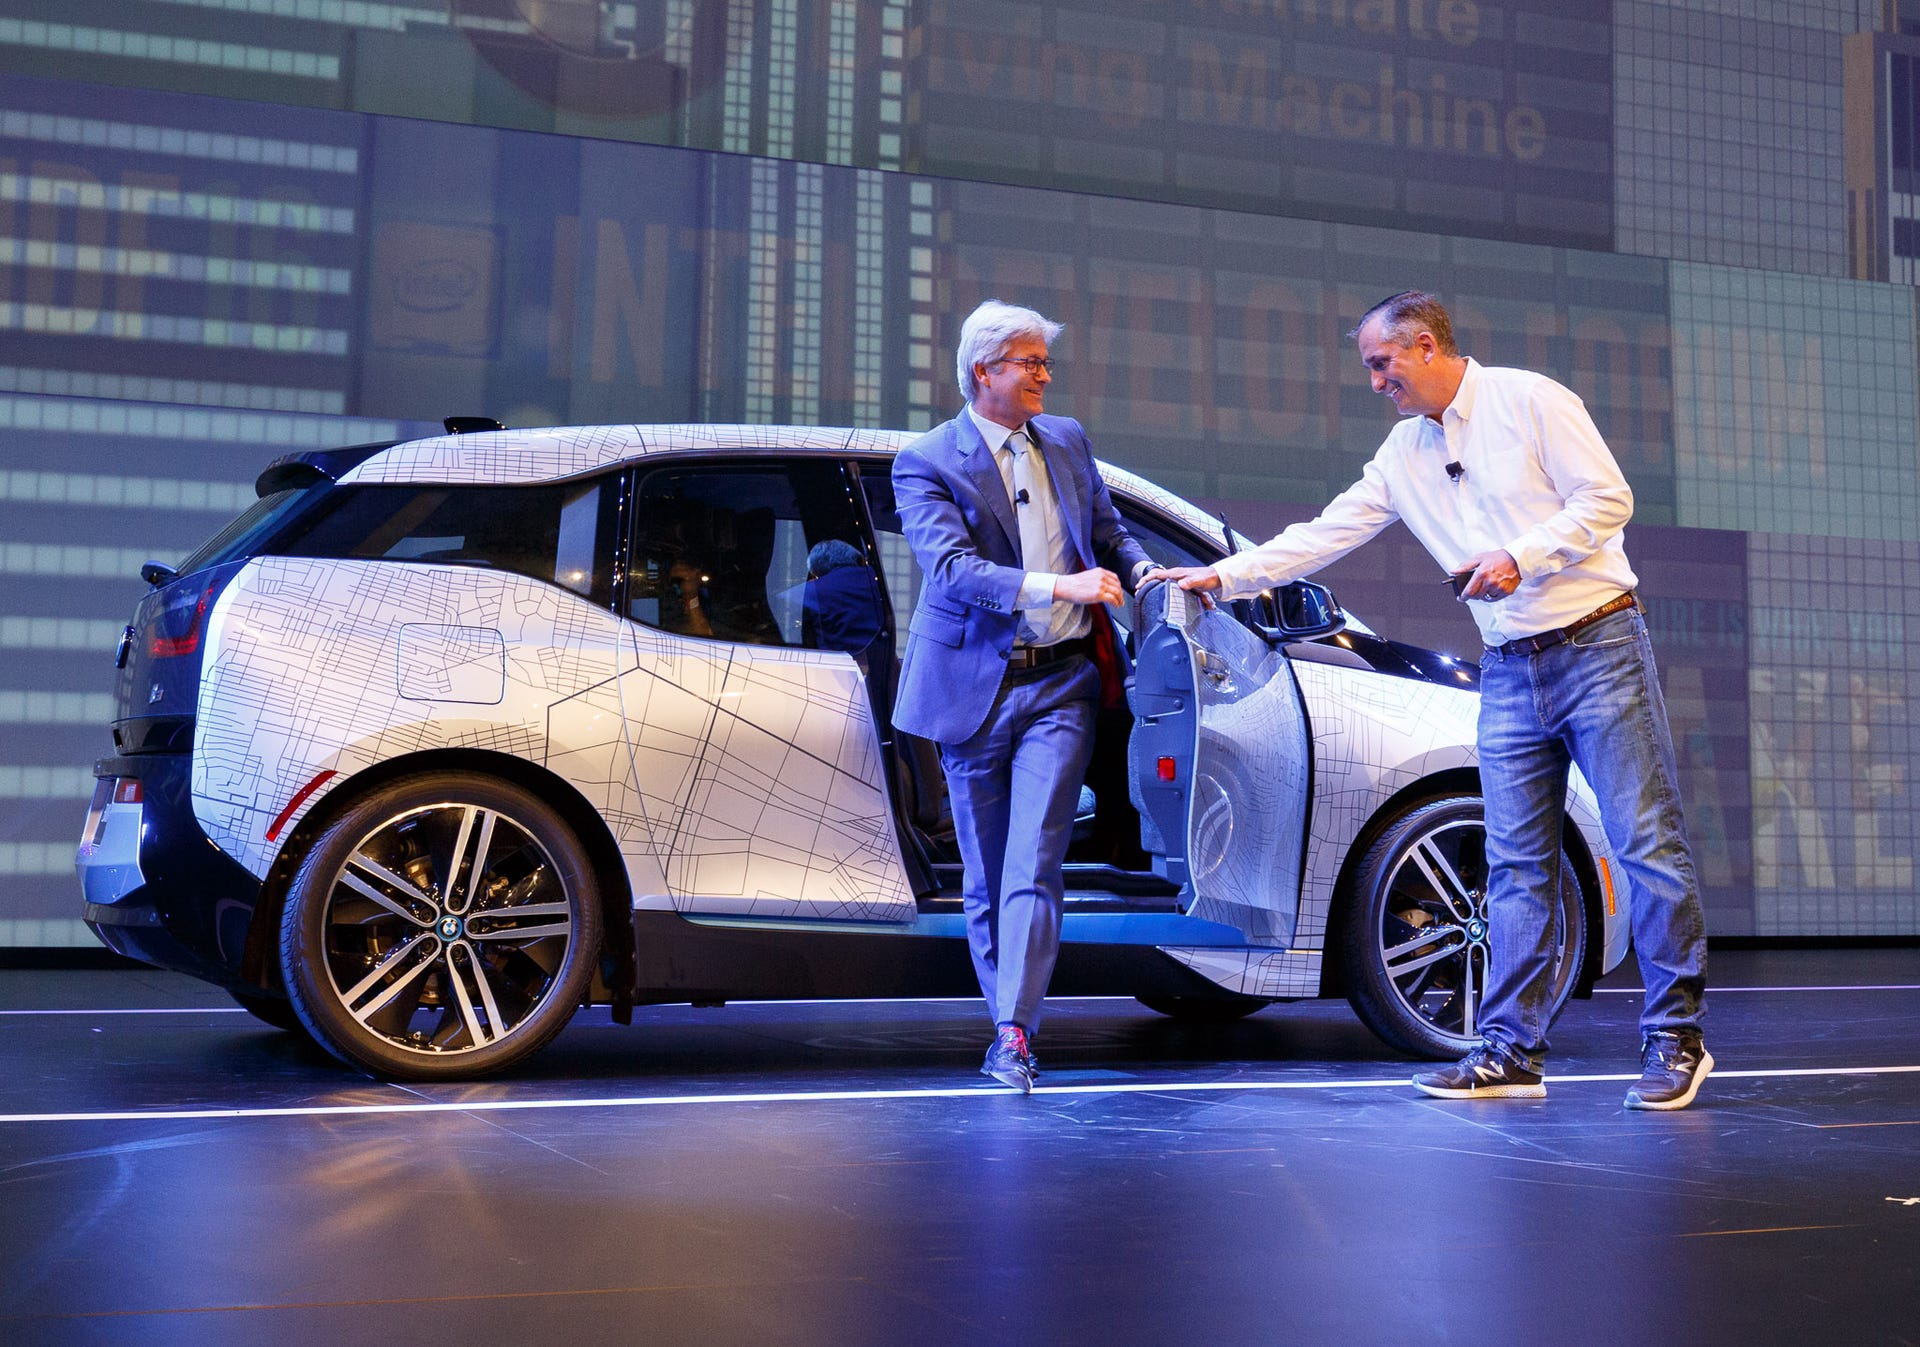 Intel and BMW self-driving car partnership